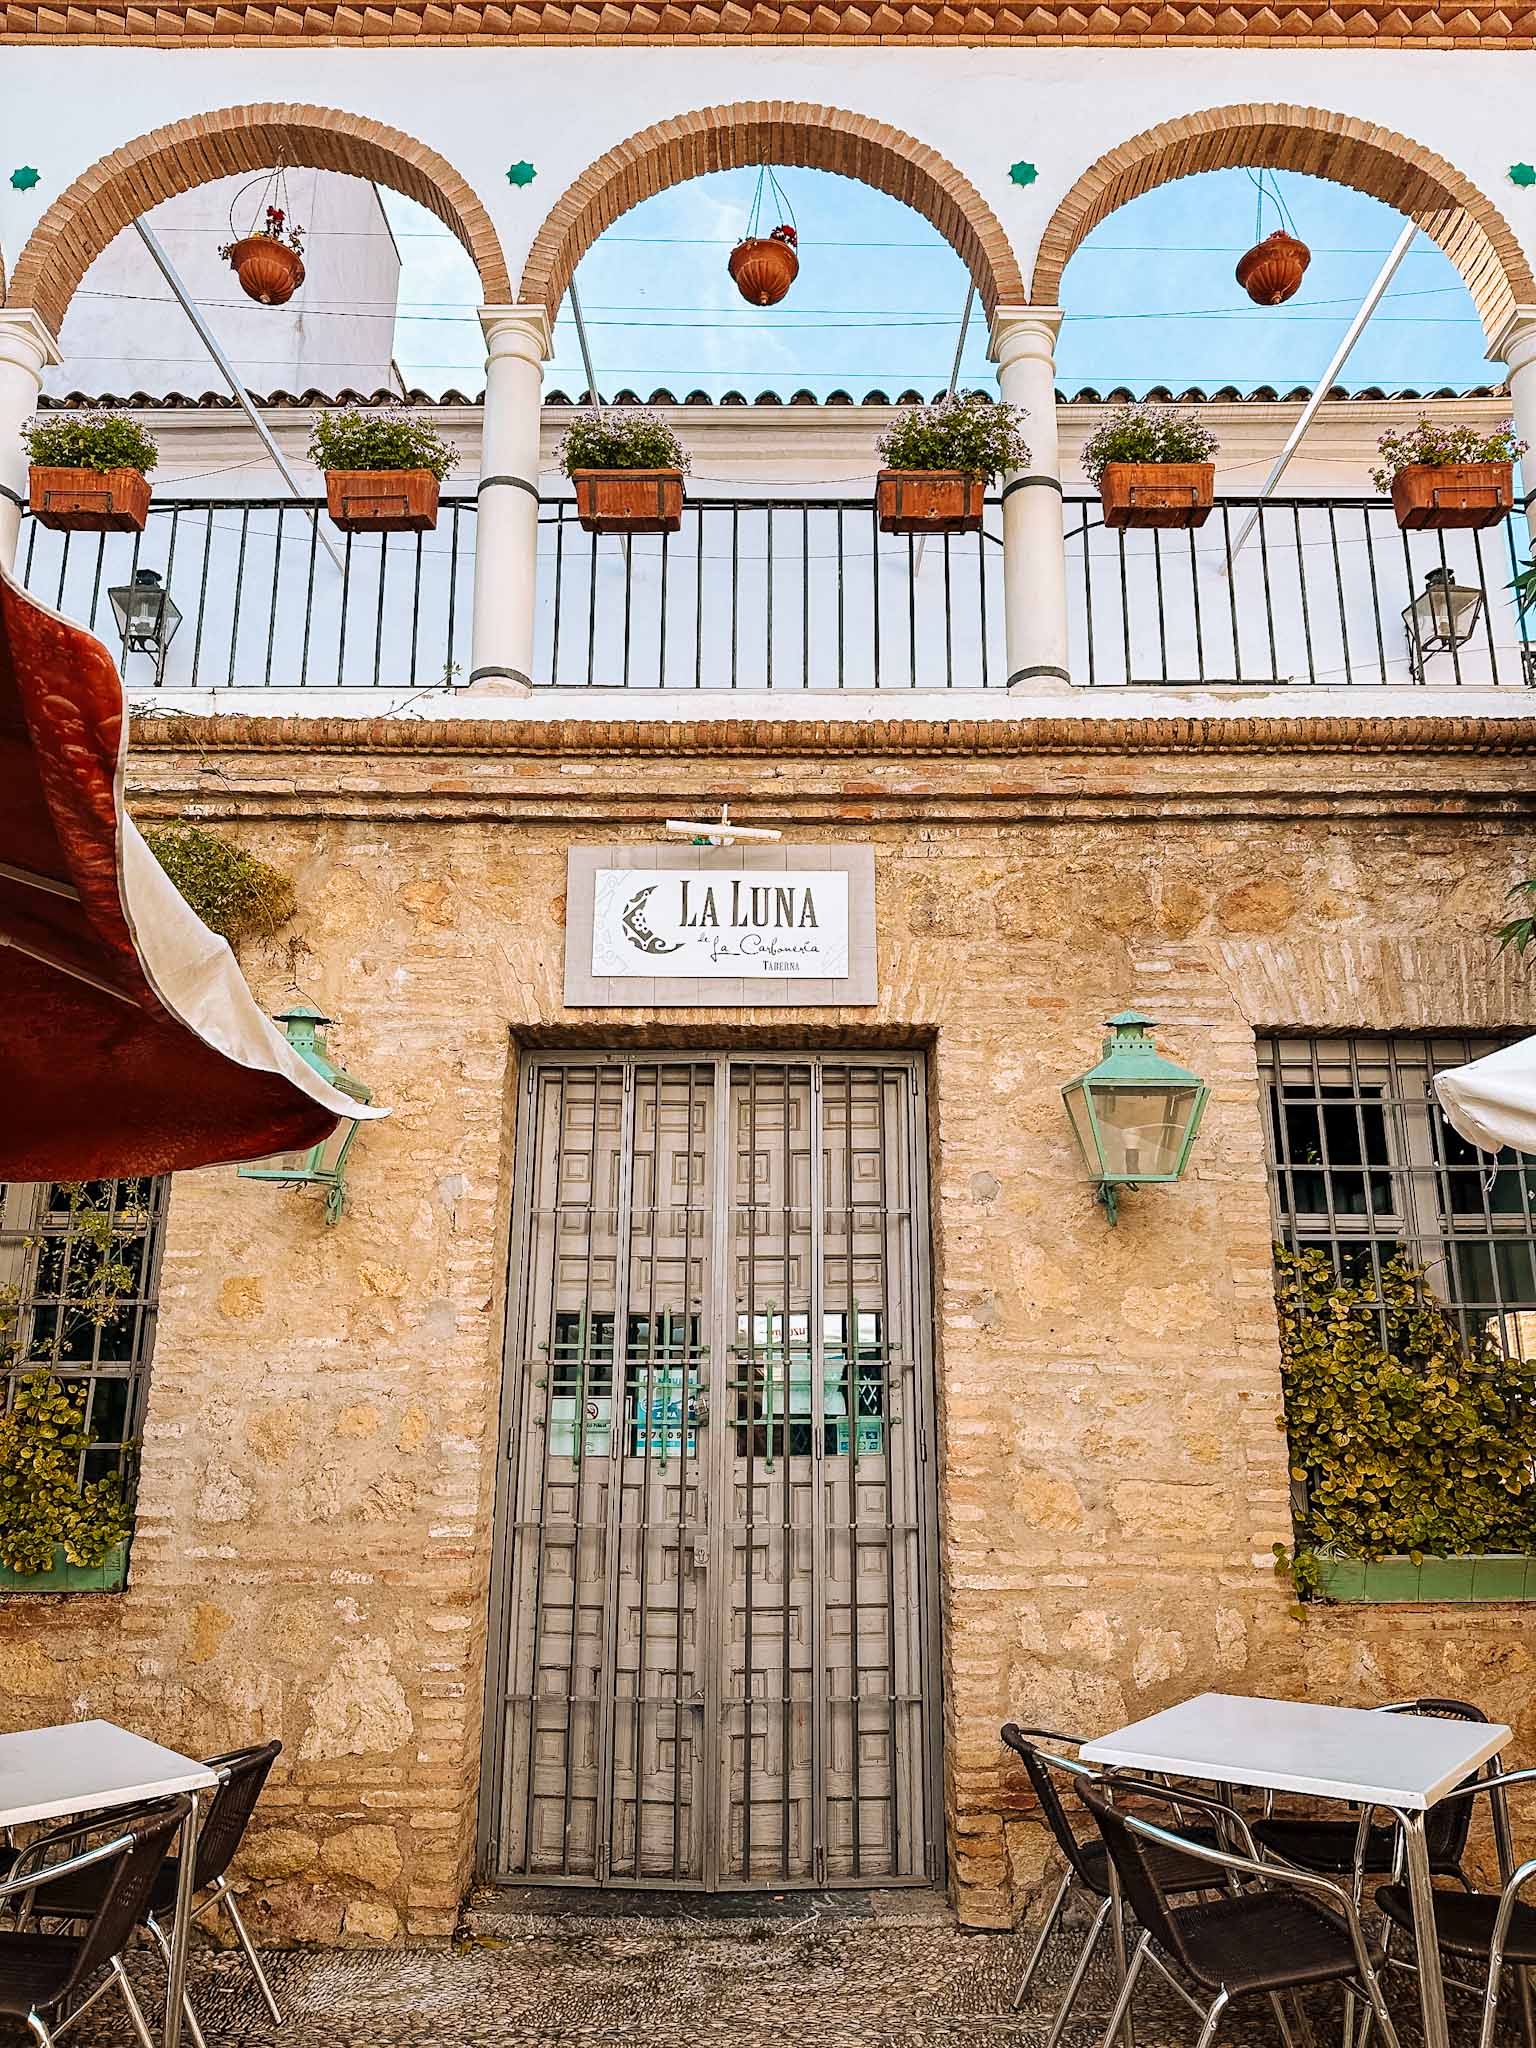 Córdoba, Spain - best hidden gems and secret spots in Córdoba